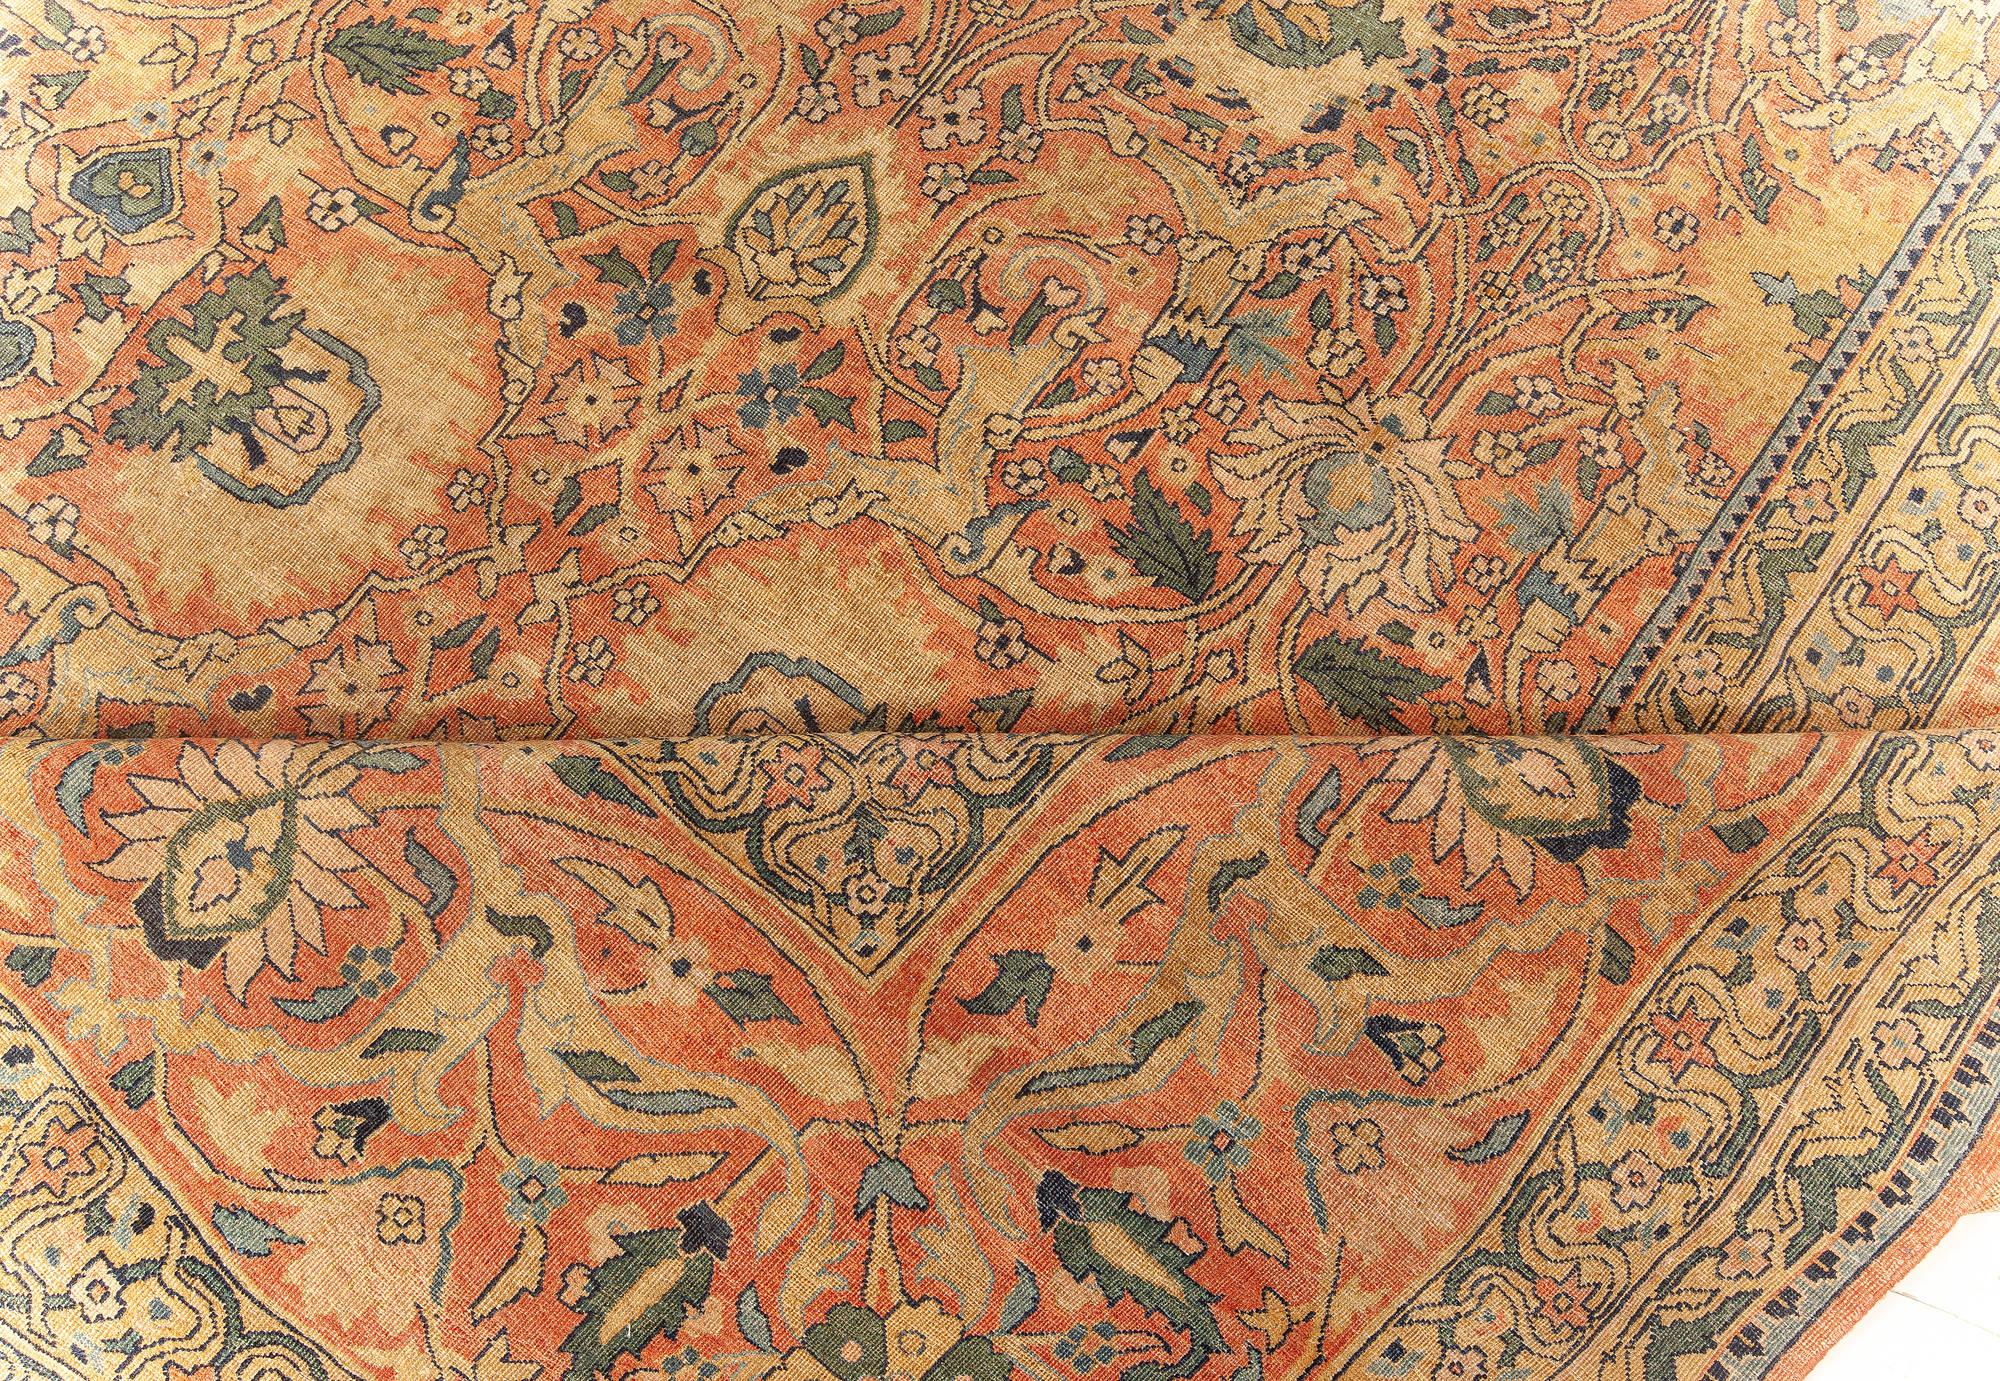 Authentic 19th Century Persian Tabriz Handmade Wool Rug
Size: 16'10